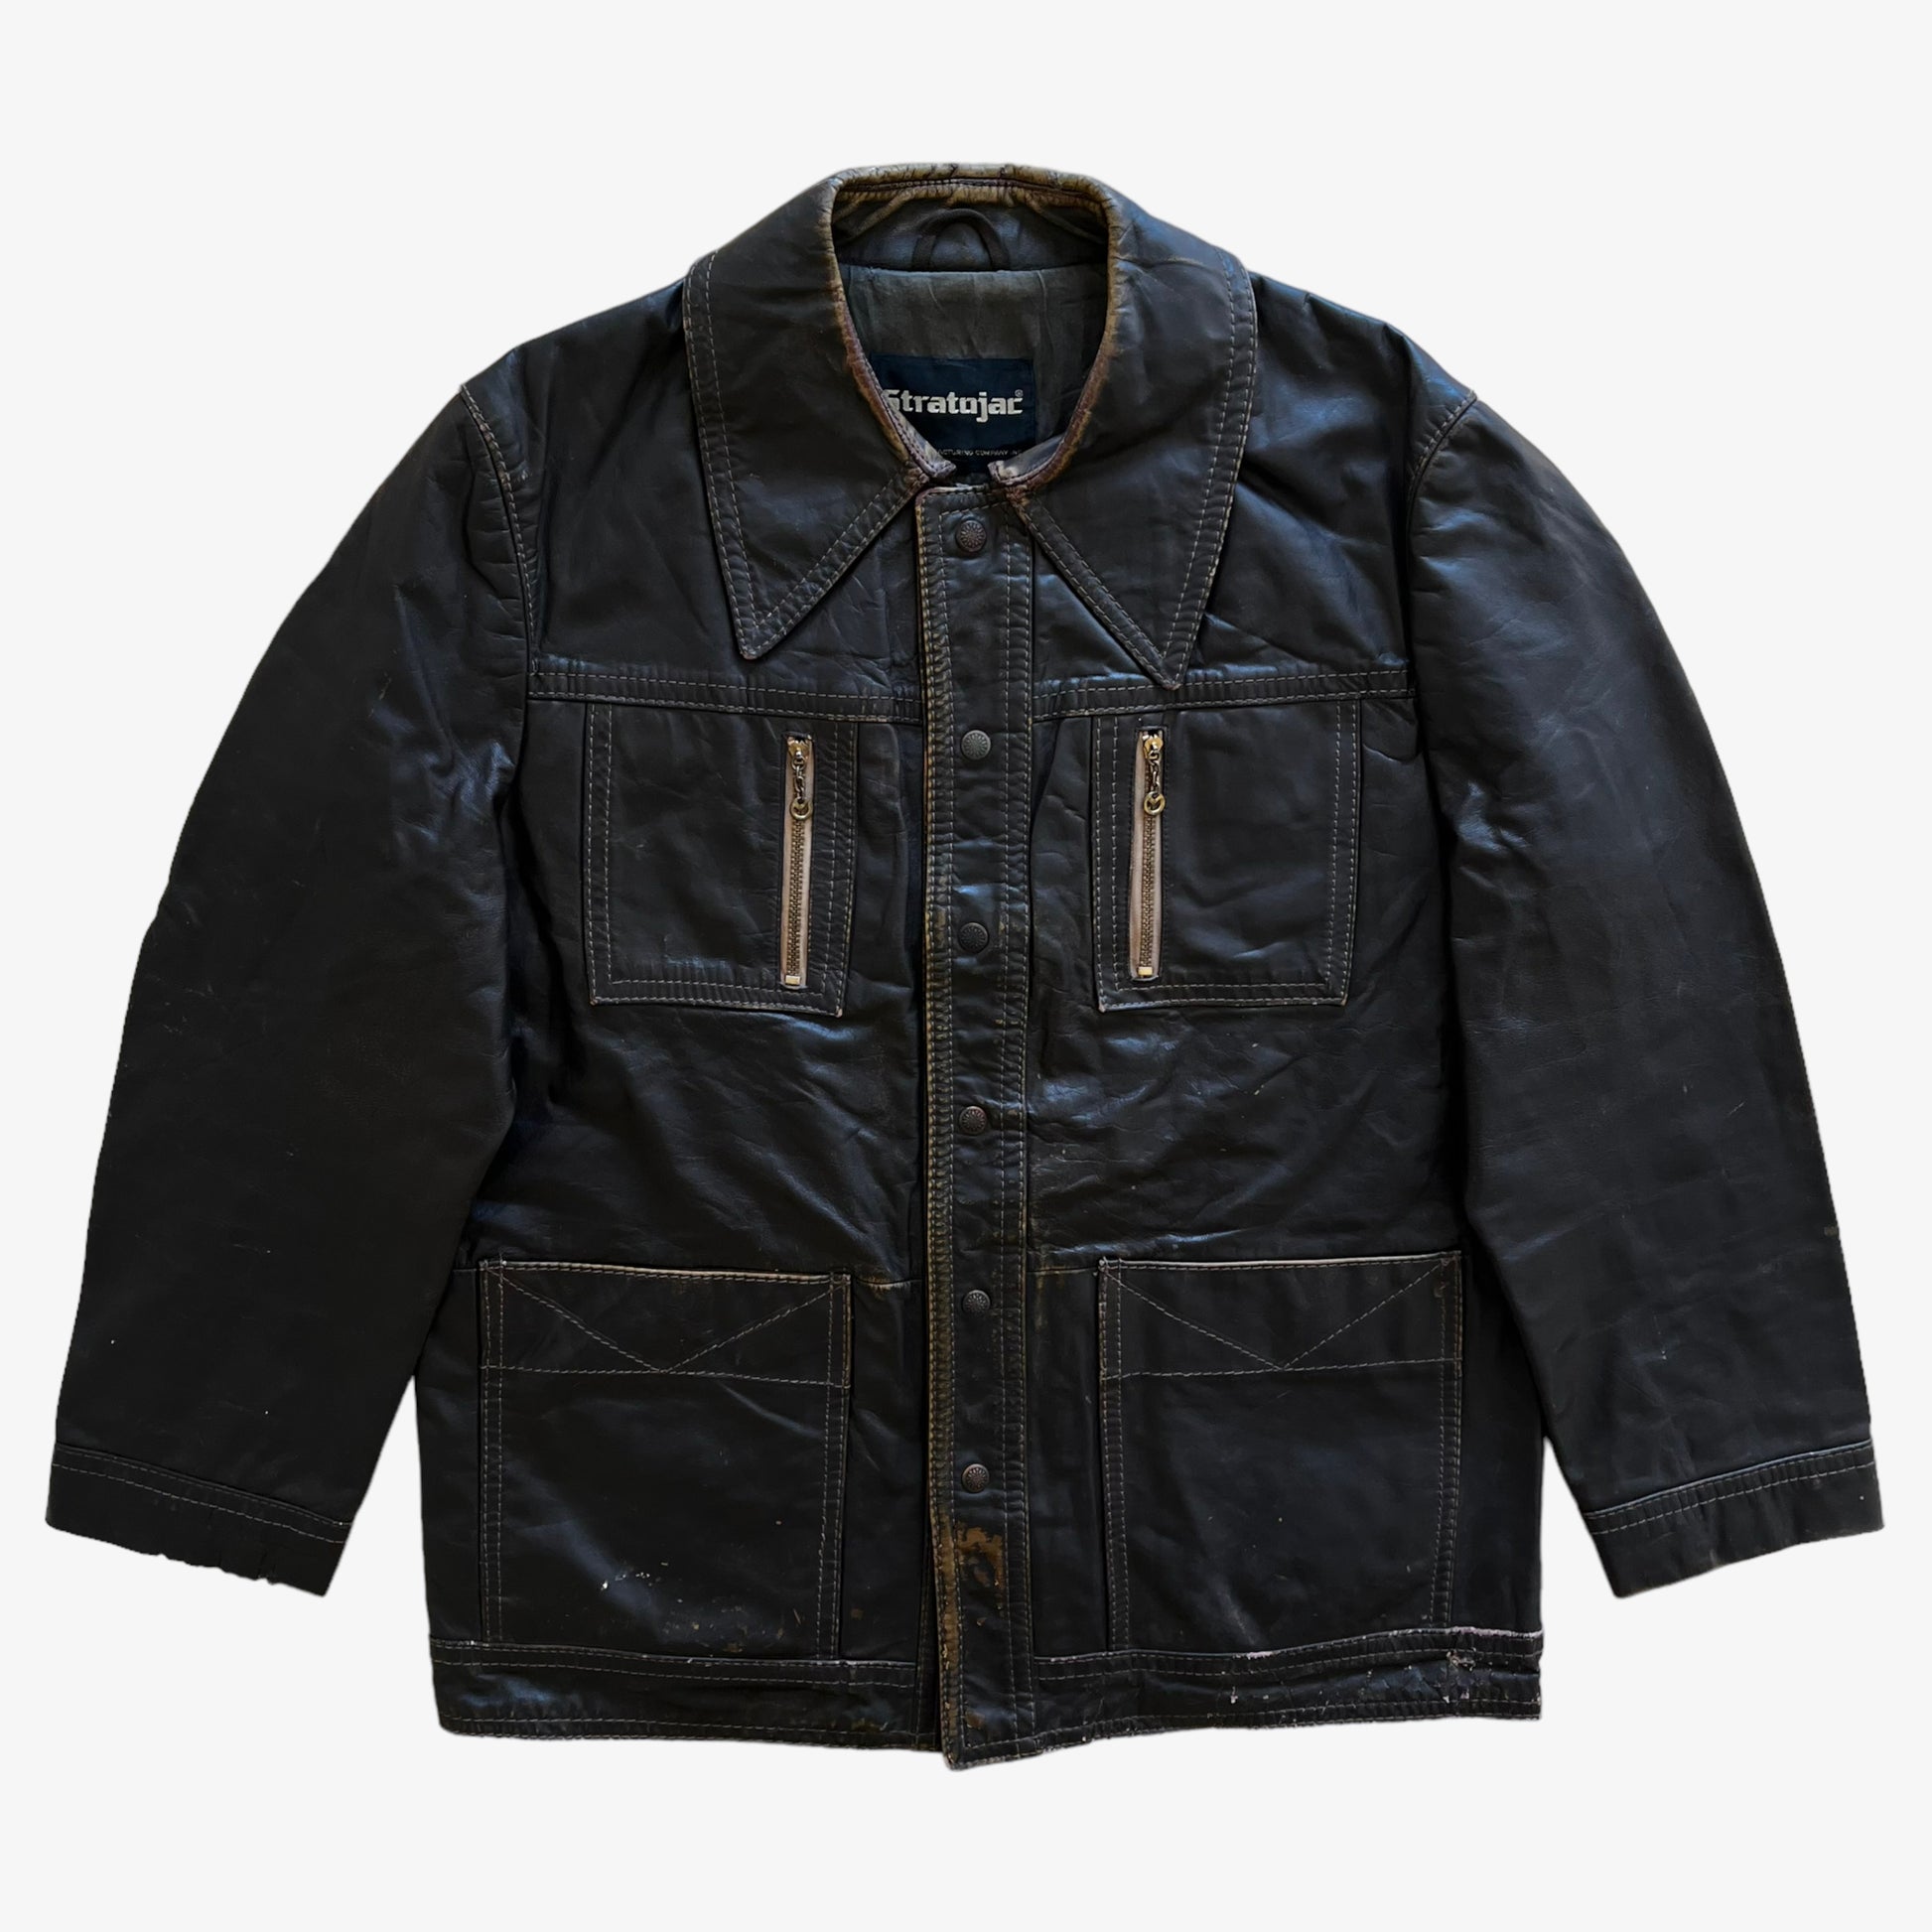 Vintage 90s Mens Stratojac Dark Brown Leather Utility Jacket - Casspios Dream